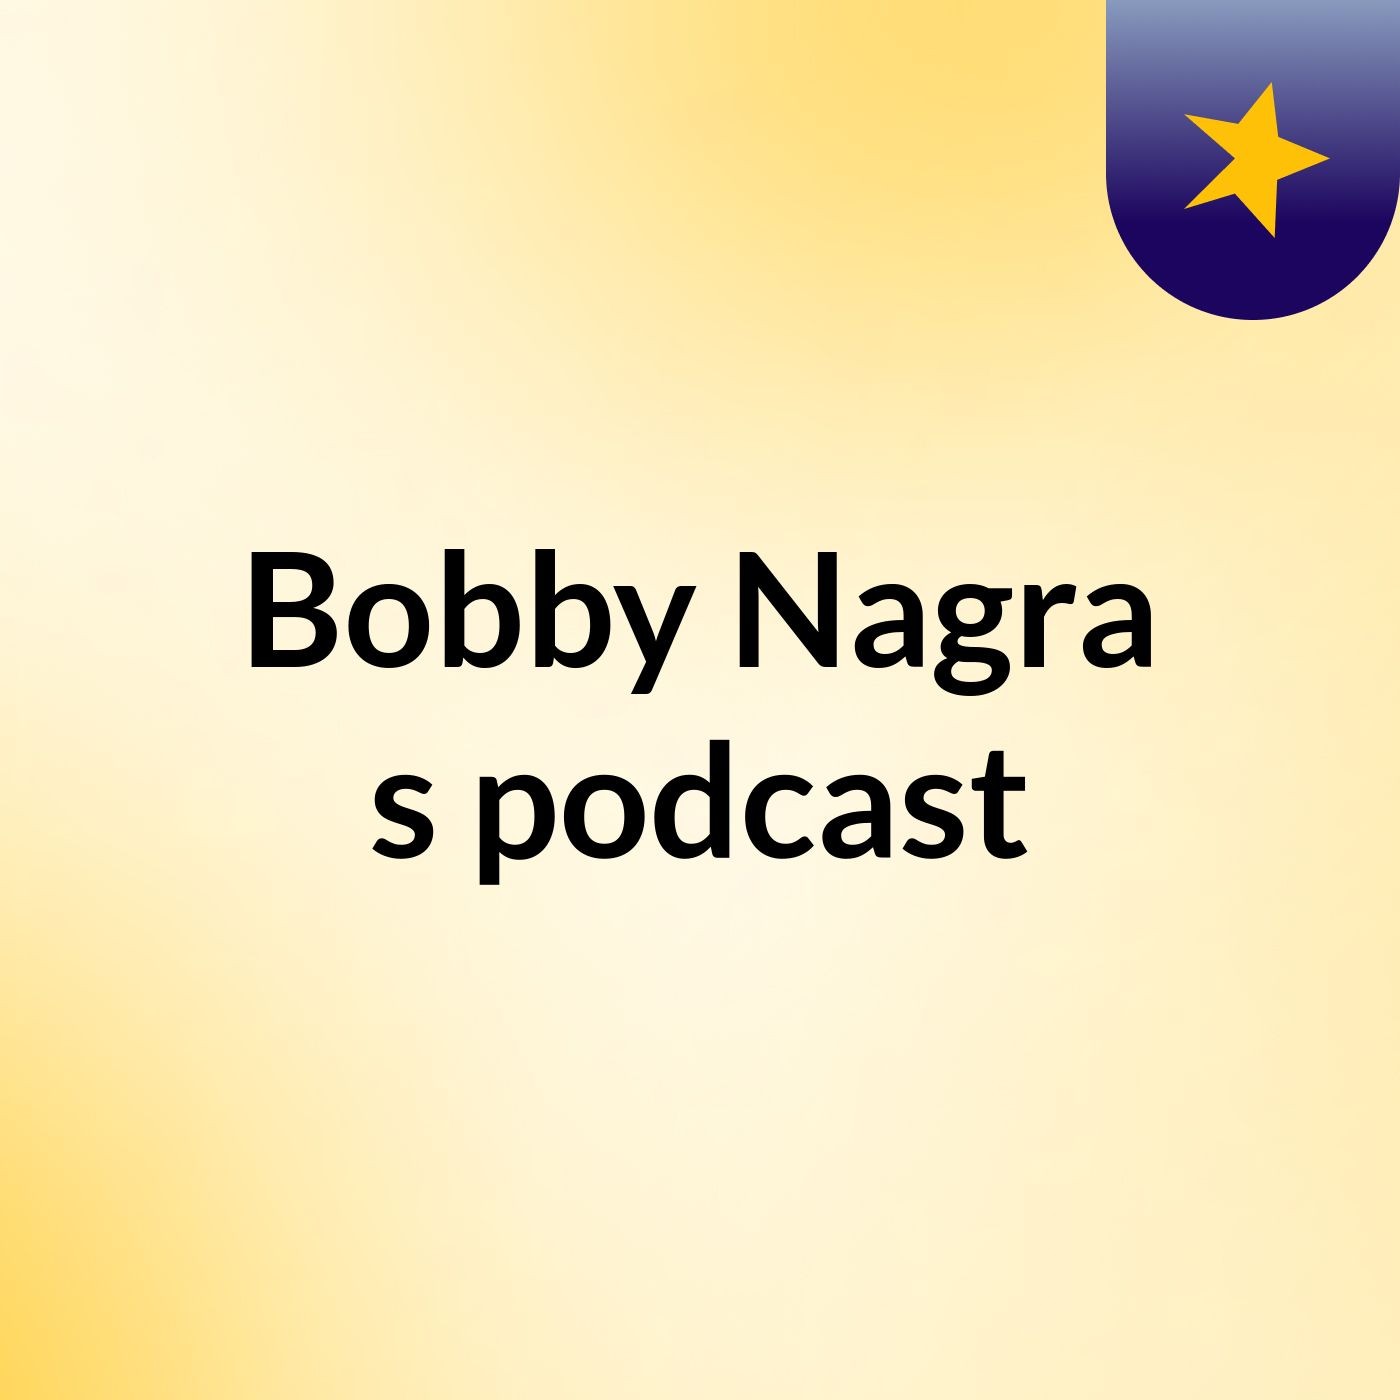 Bobby Nagra's podcast